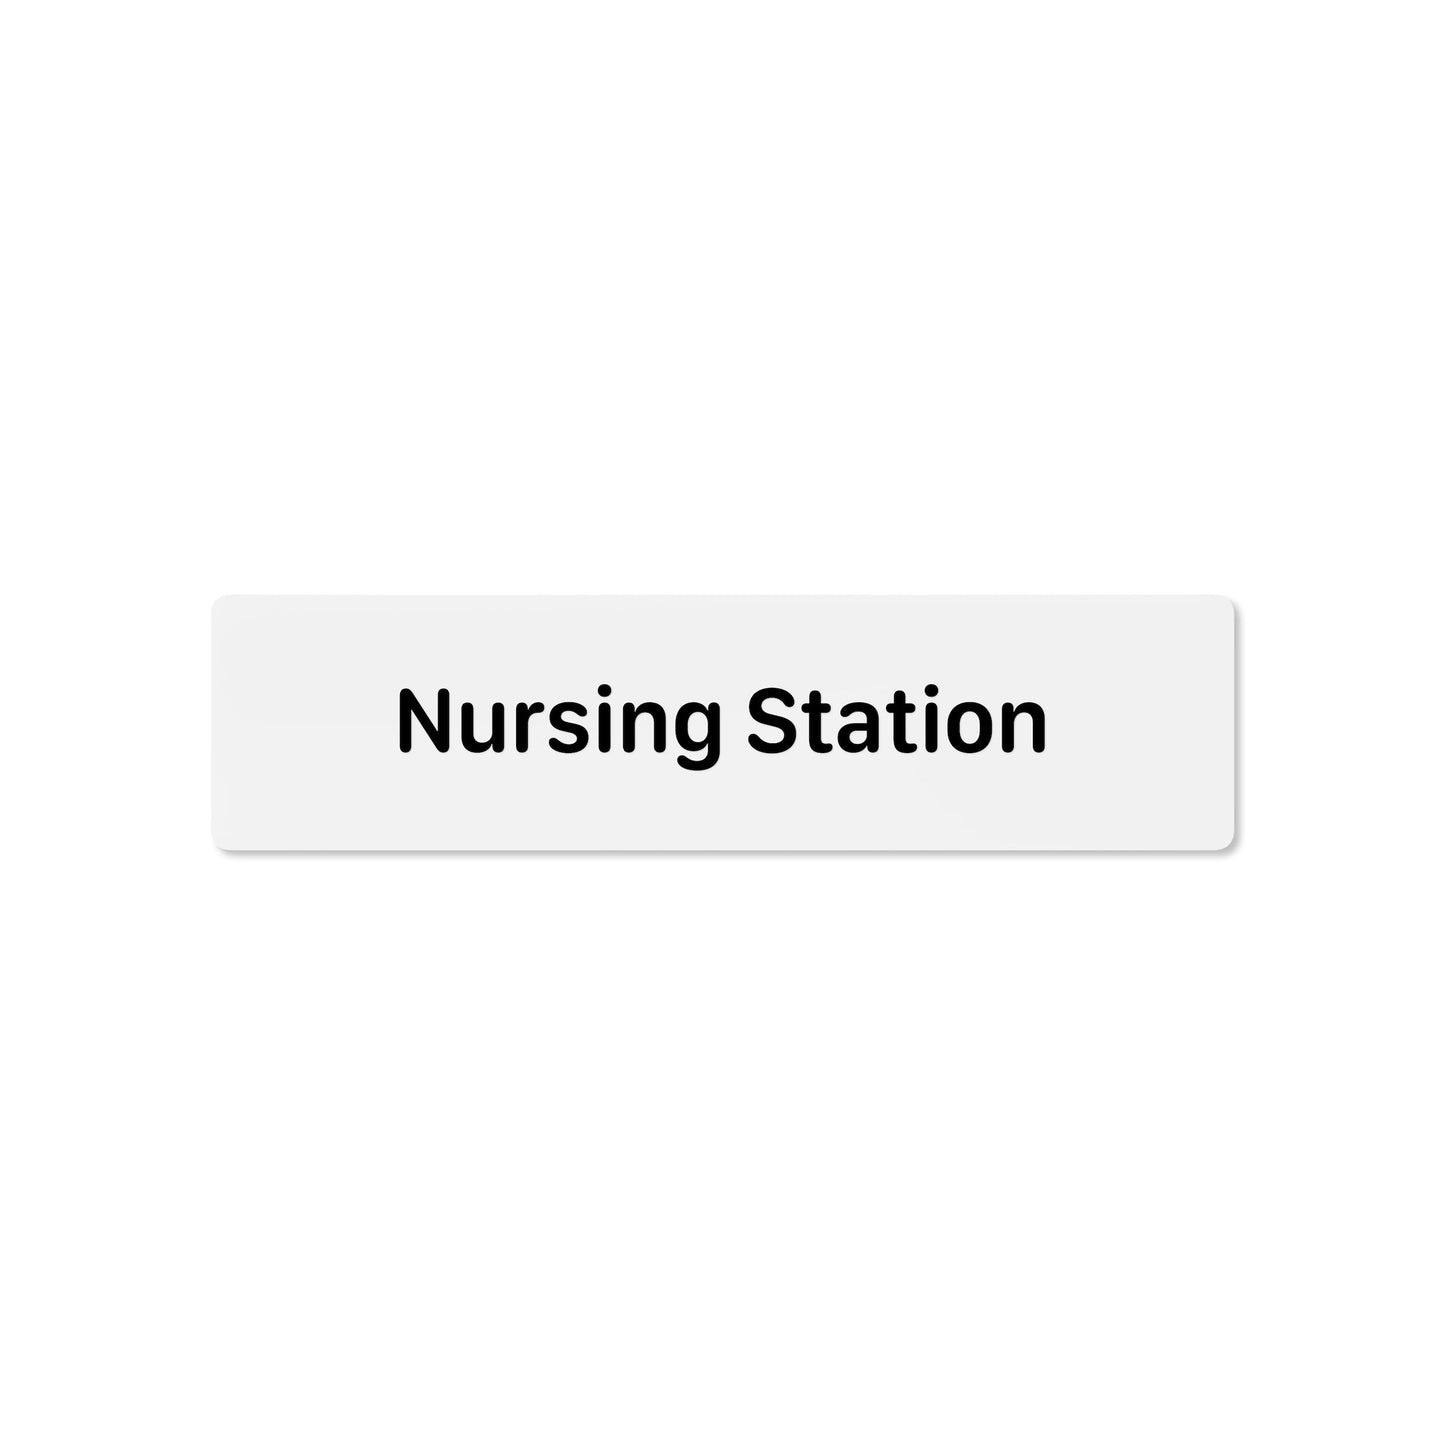 Nursing Station